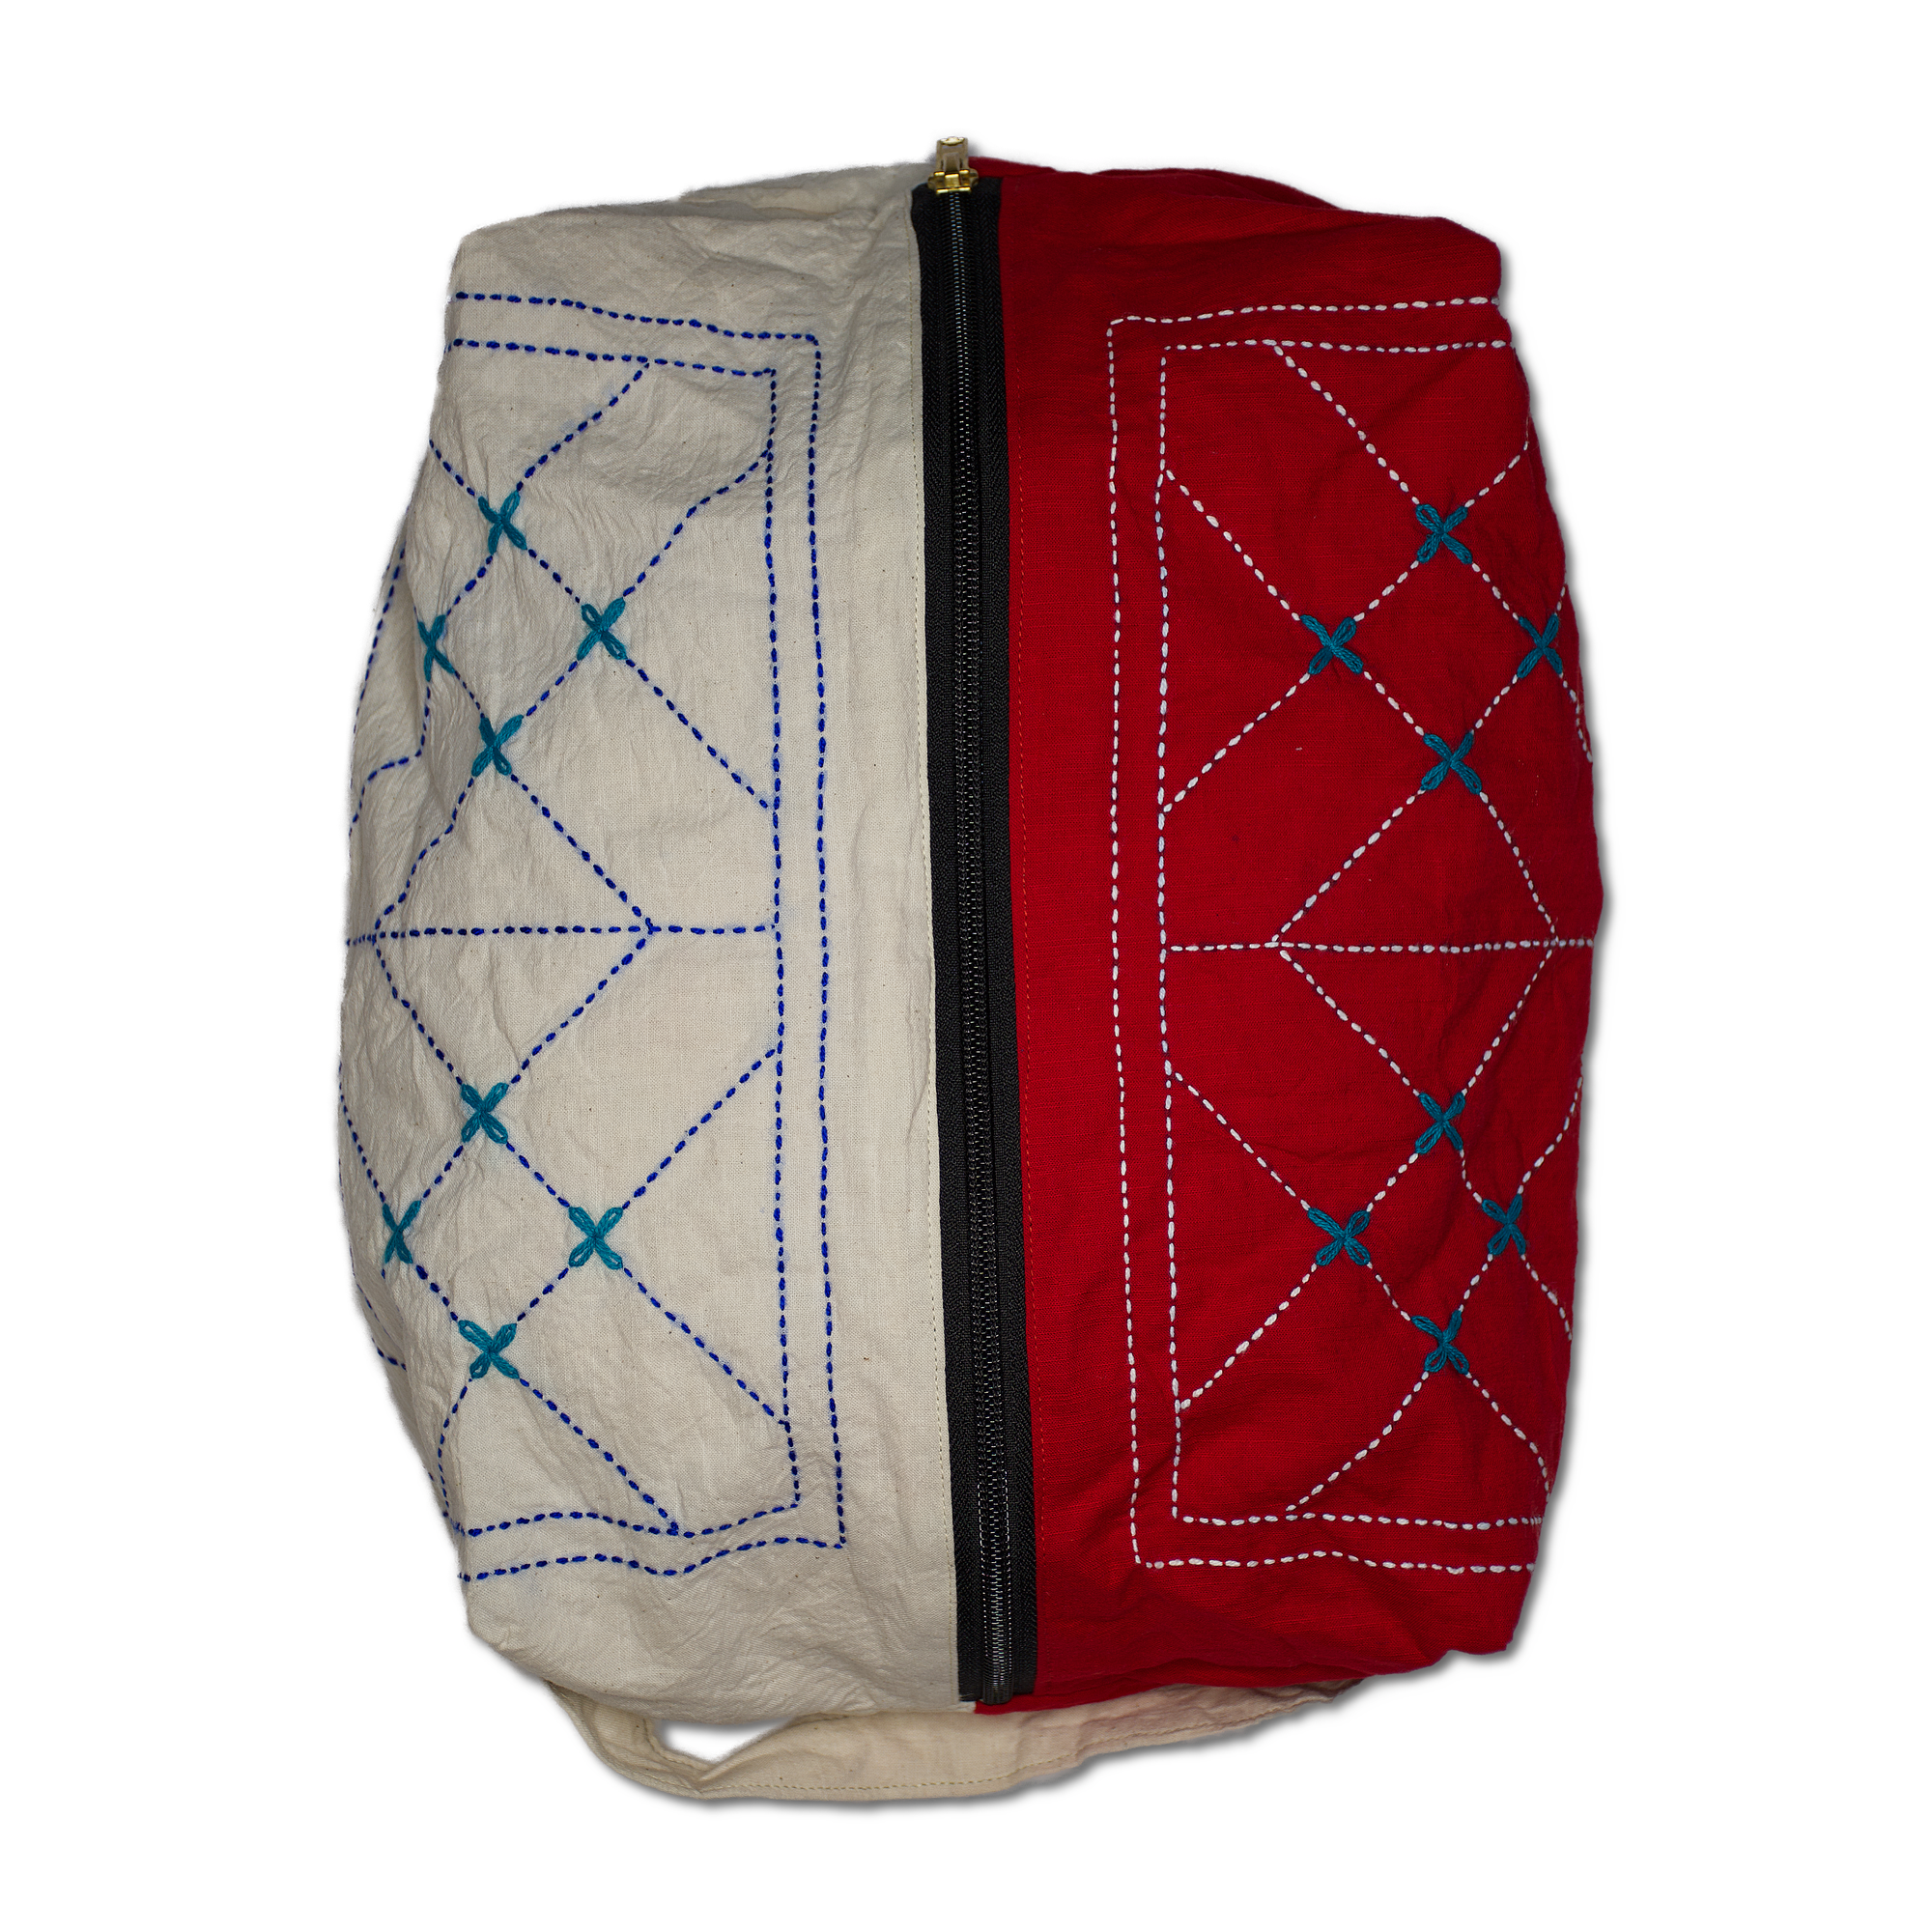 Pouch Bags - Kurigram (geometric) Design - Sumi (Red) / Asfara (White)